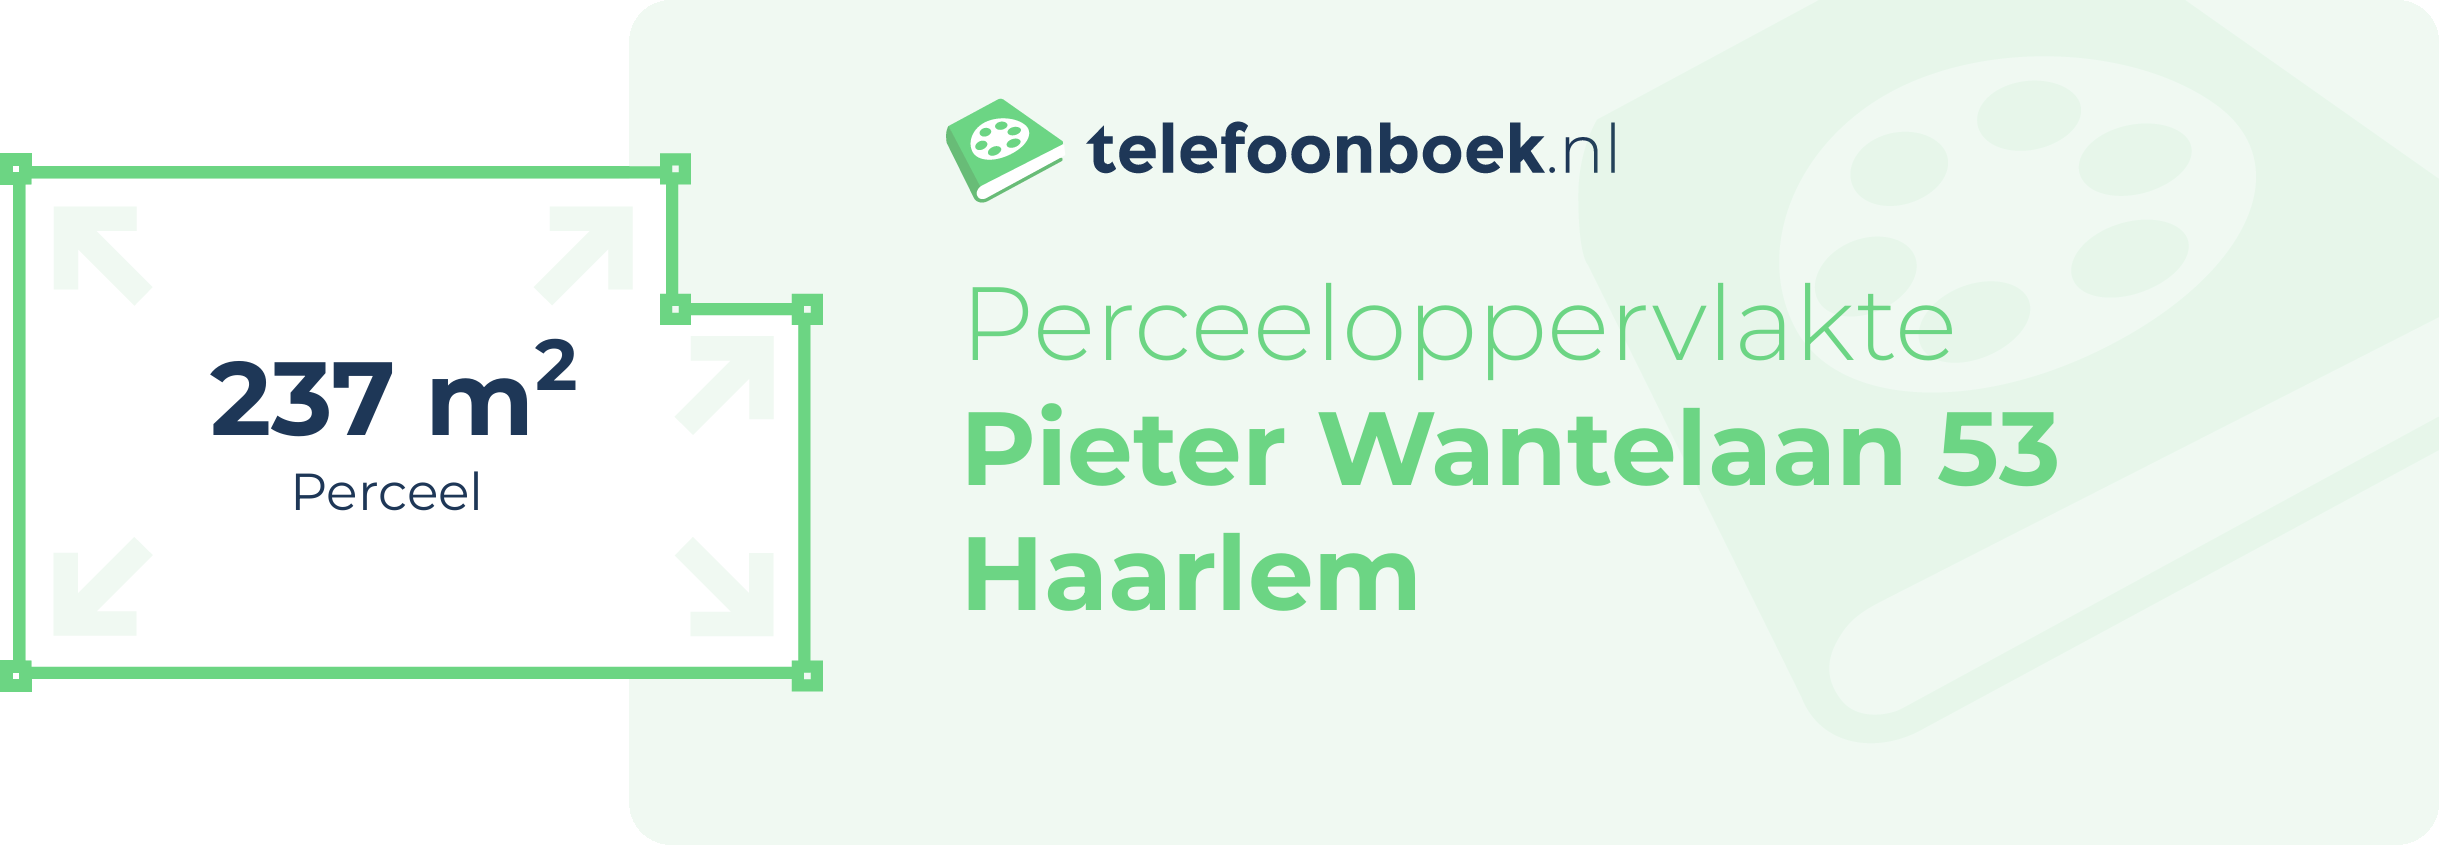 Perceeloppervlakte Pieter Wantelaan 53 Haarlem